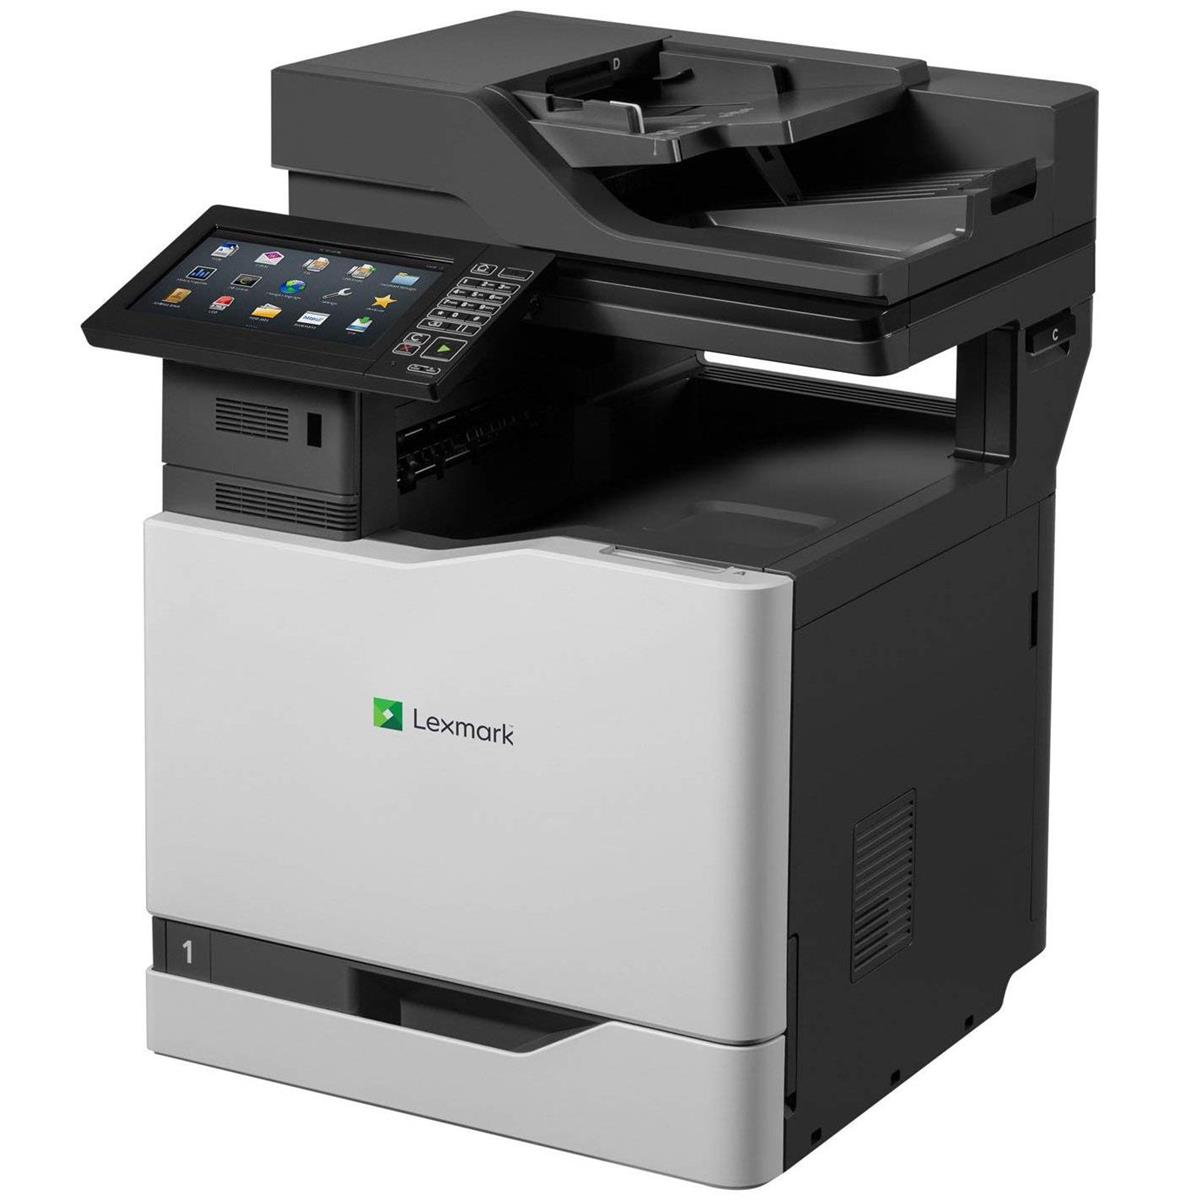 Image of Lexmark CX825de Color Laser Multifunction Printer